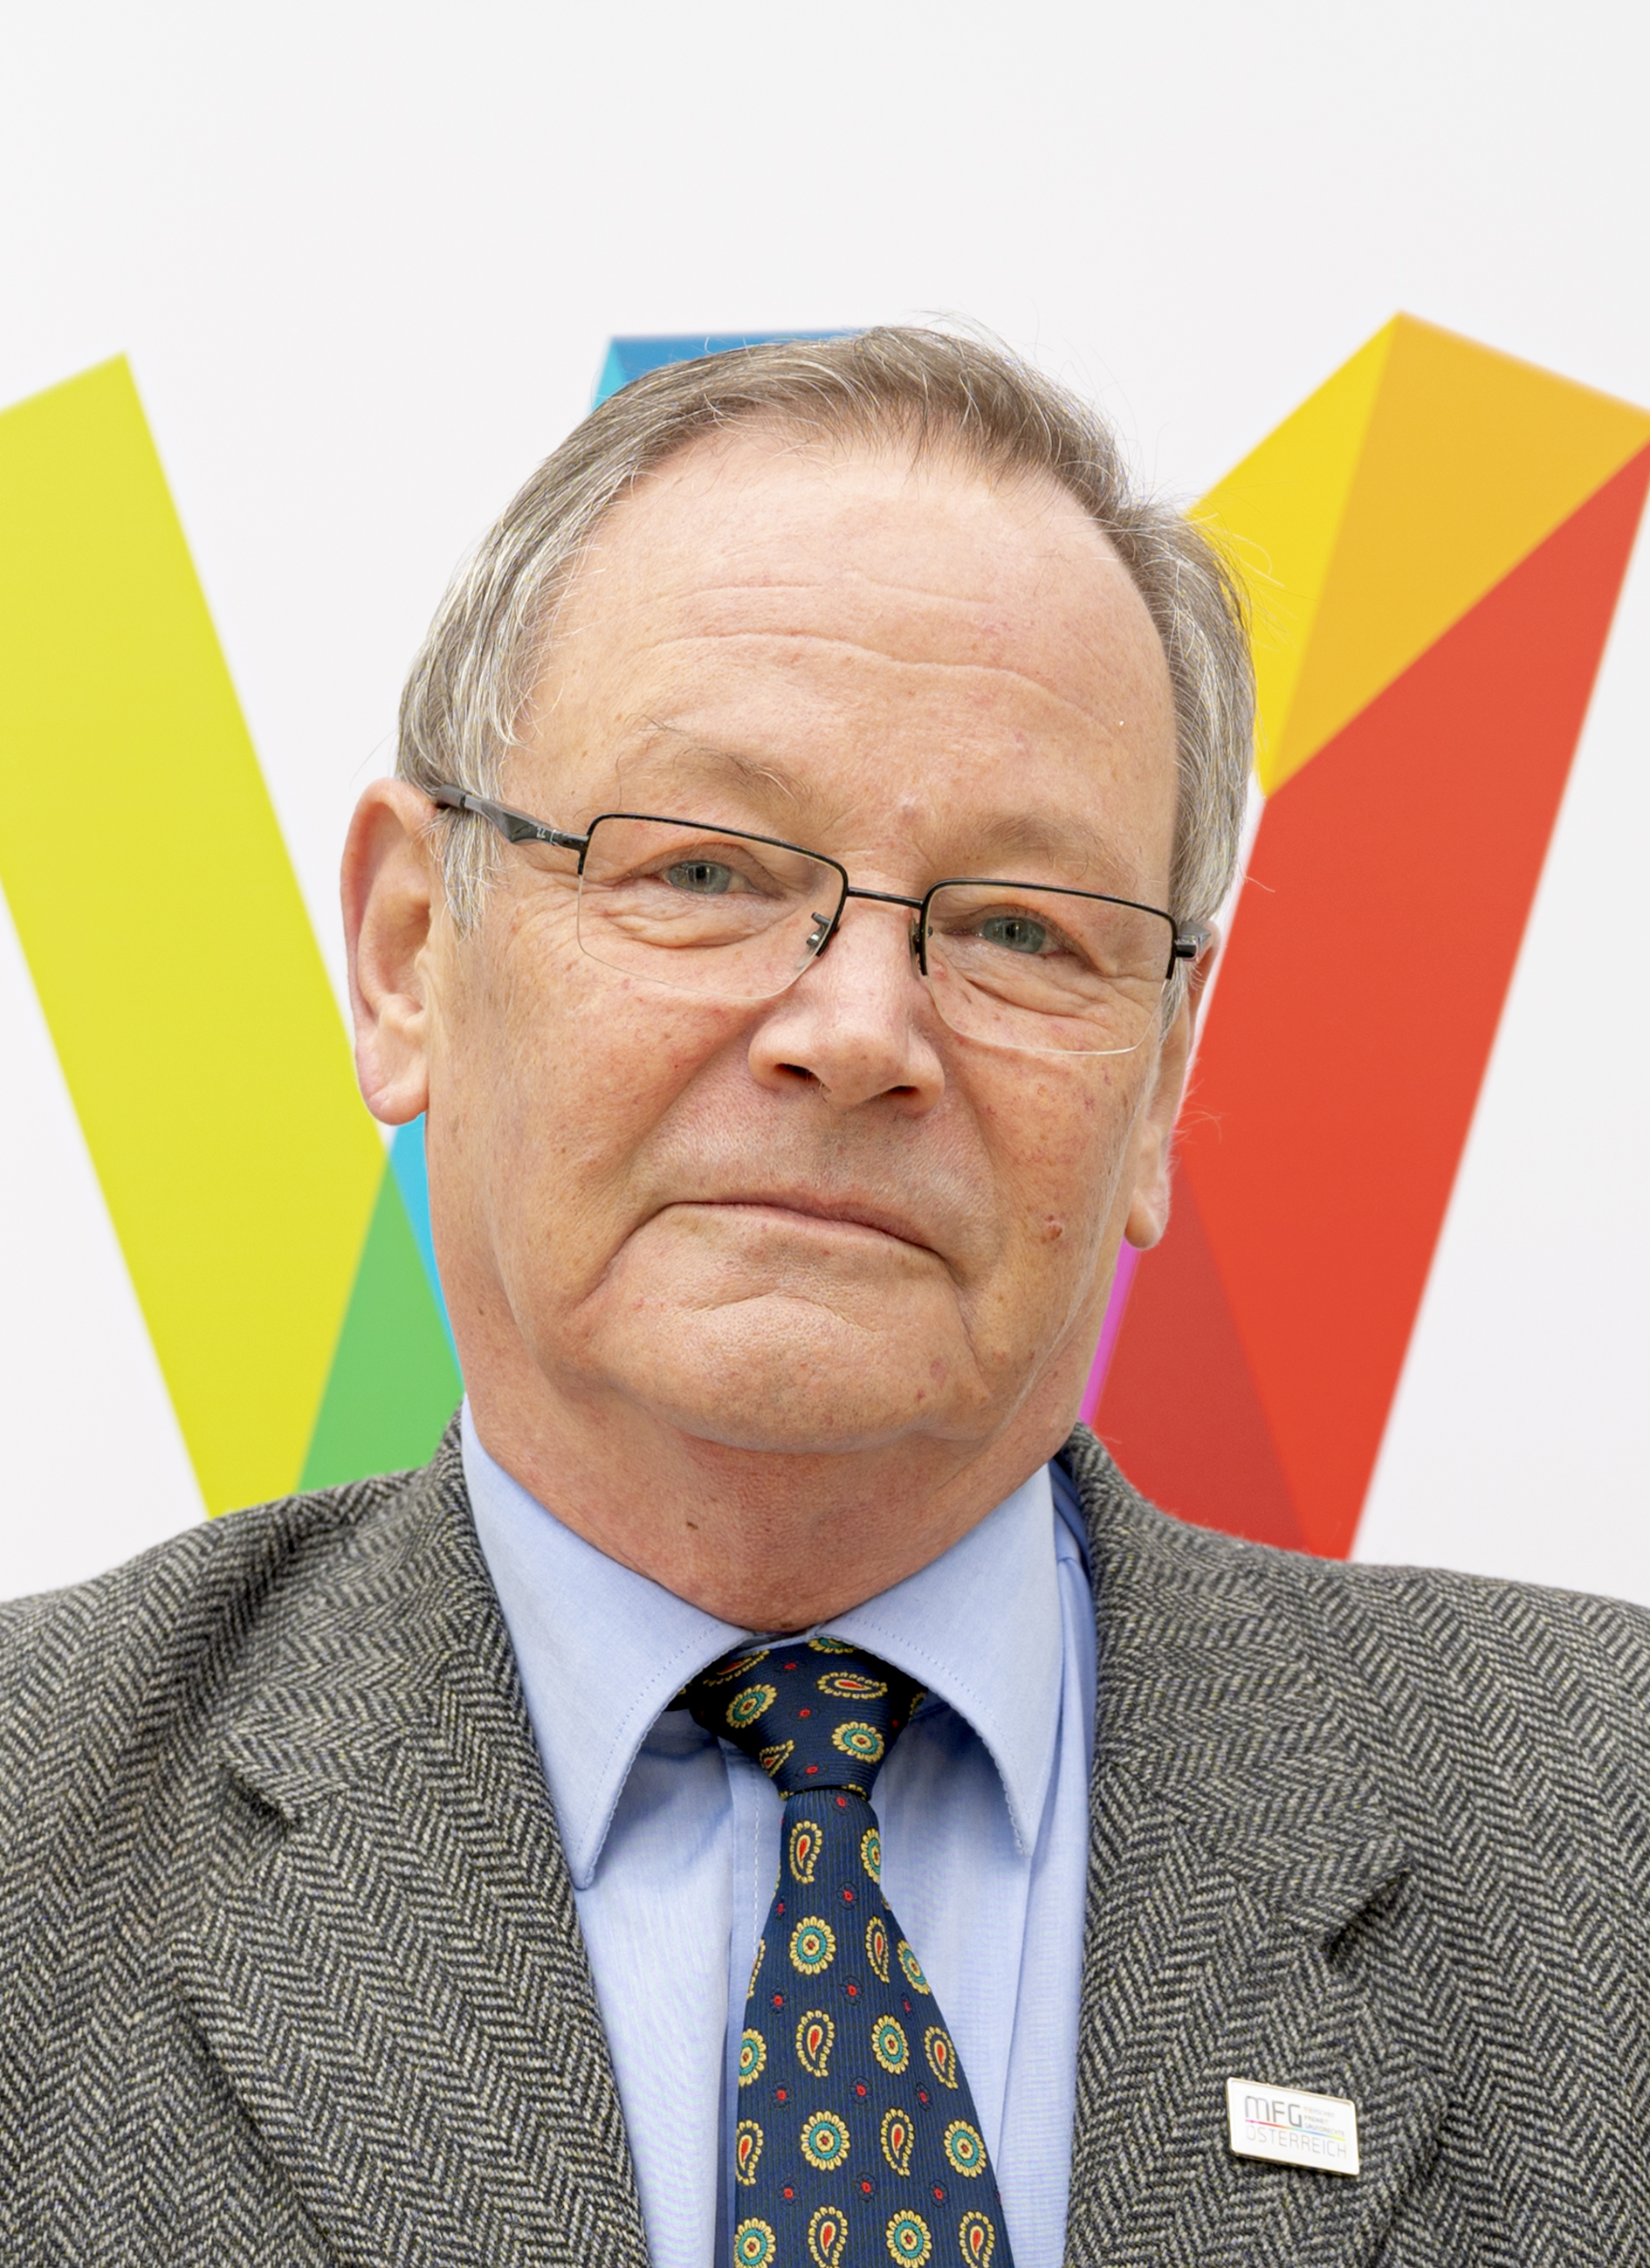 Gemeinderat Jörg Wehofsich